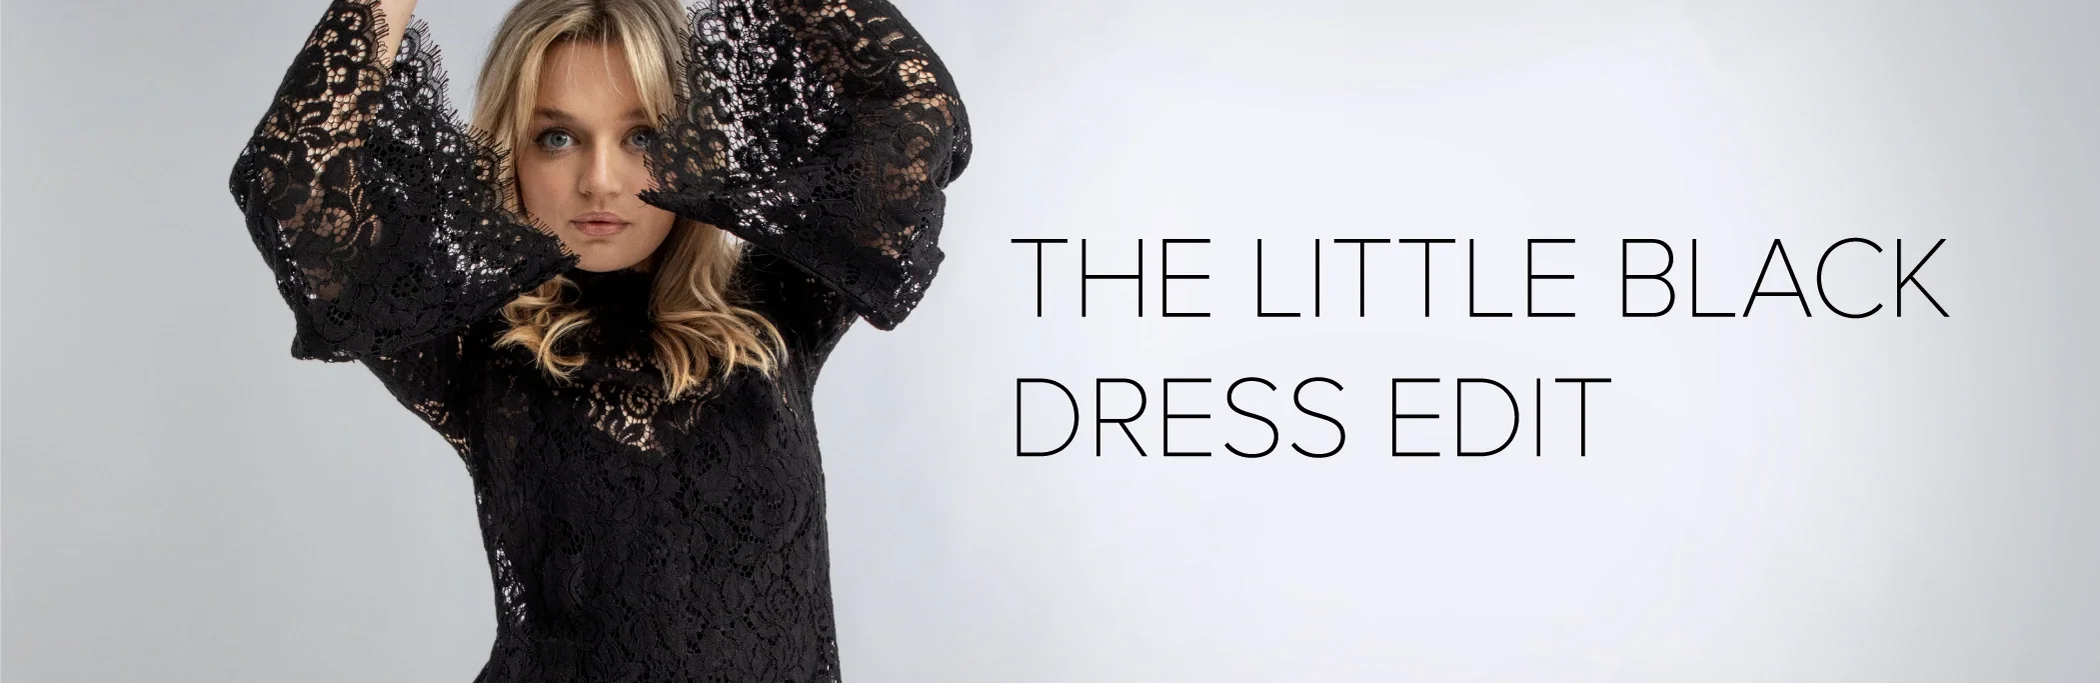 THE LITTLE BLACK DRESS EDIT